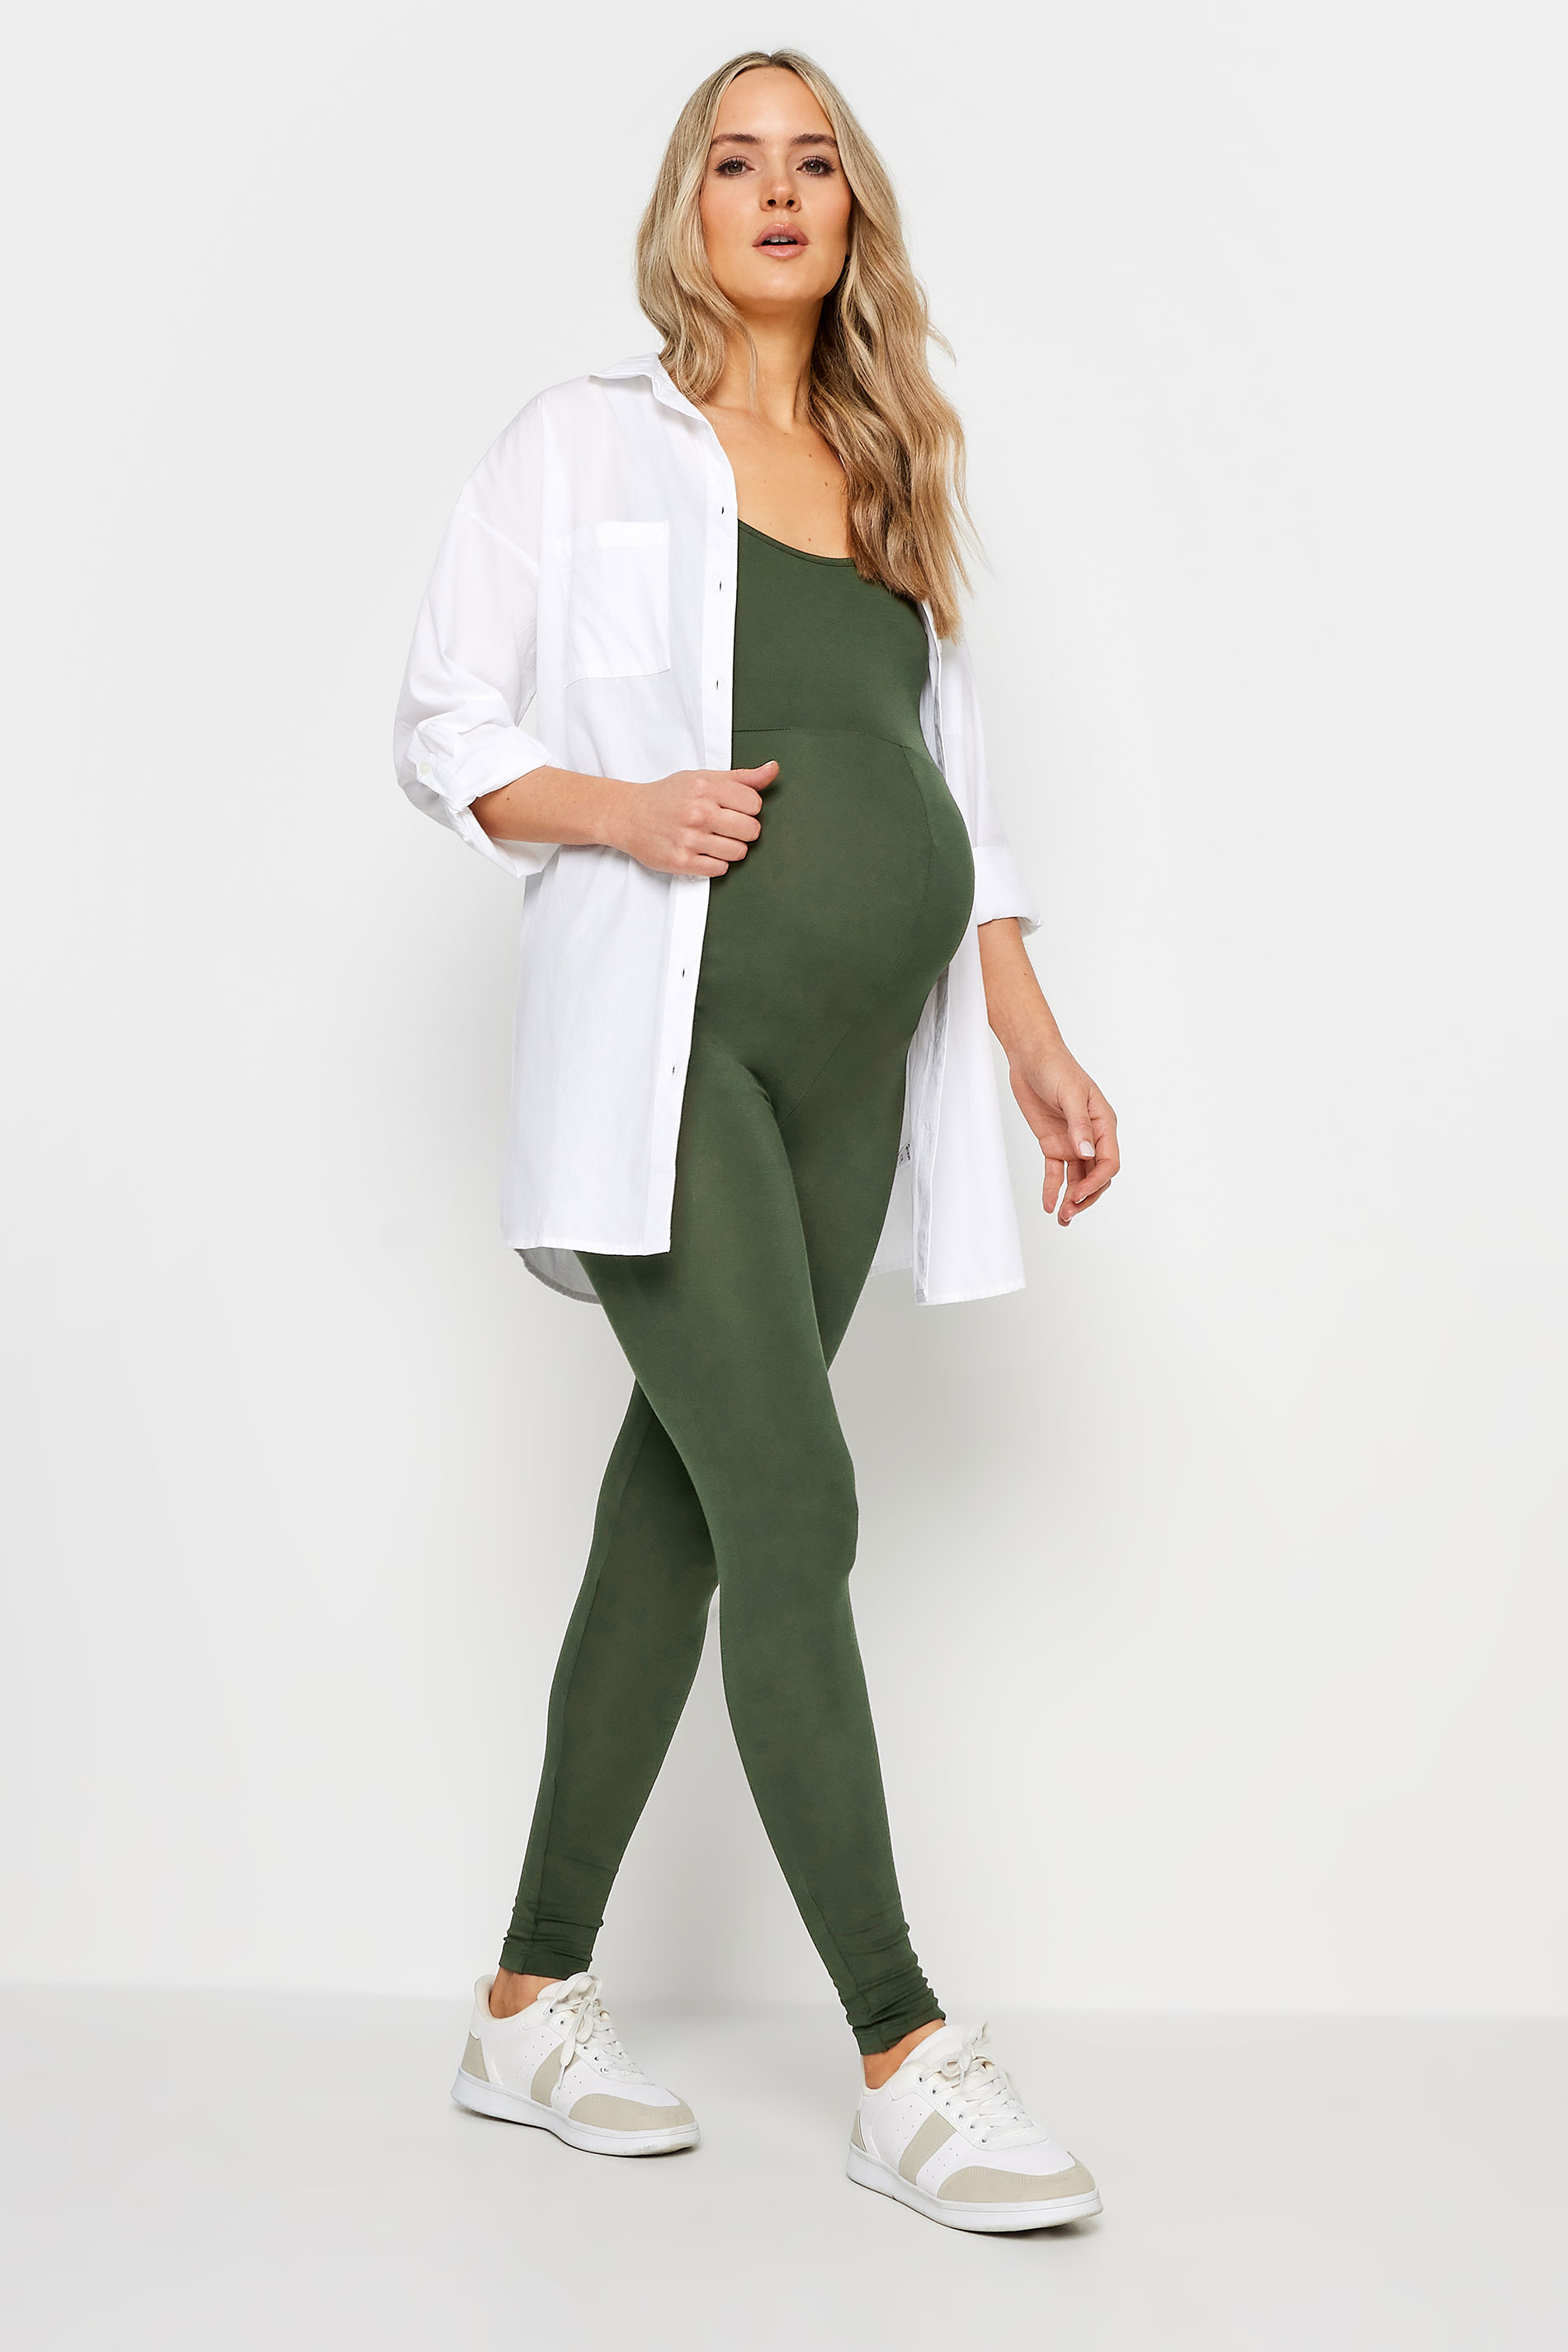 LTS Tall Women's Maternity Khaki Green Sleeveless Unitard Jumpsuit | Long Tall Sally 2